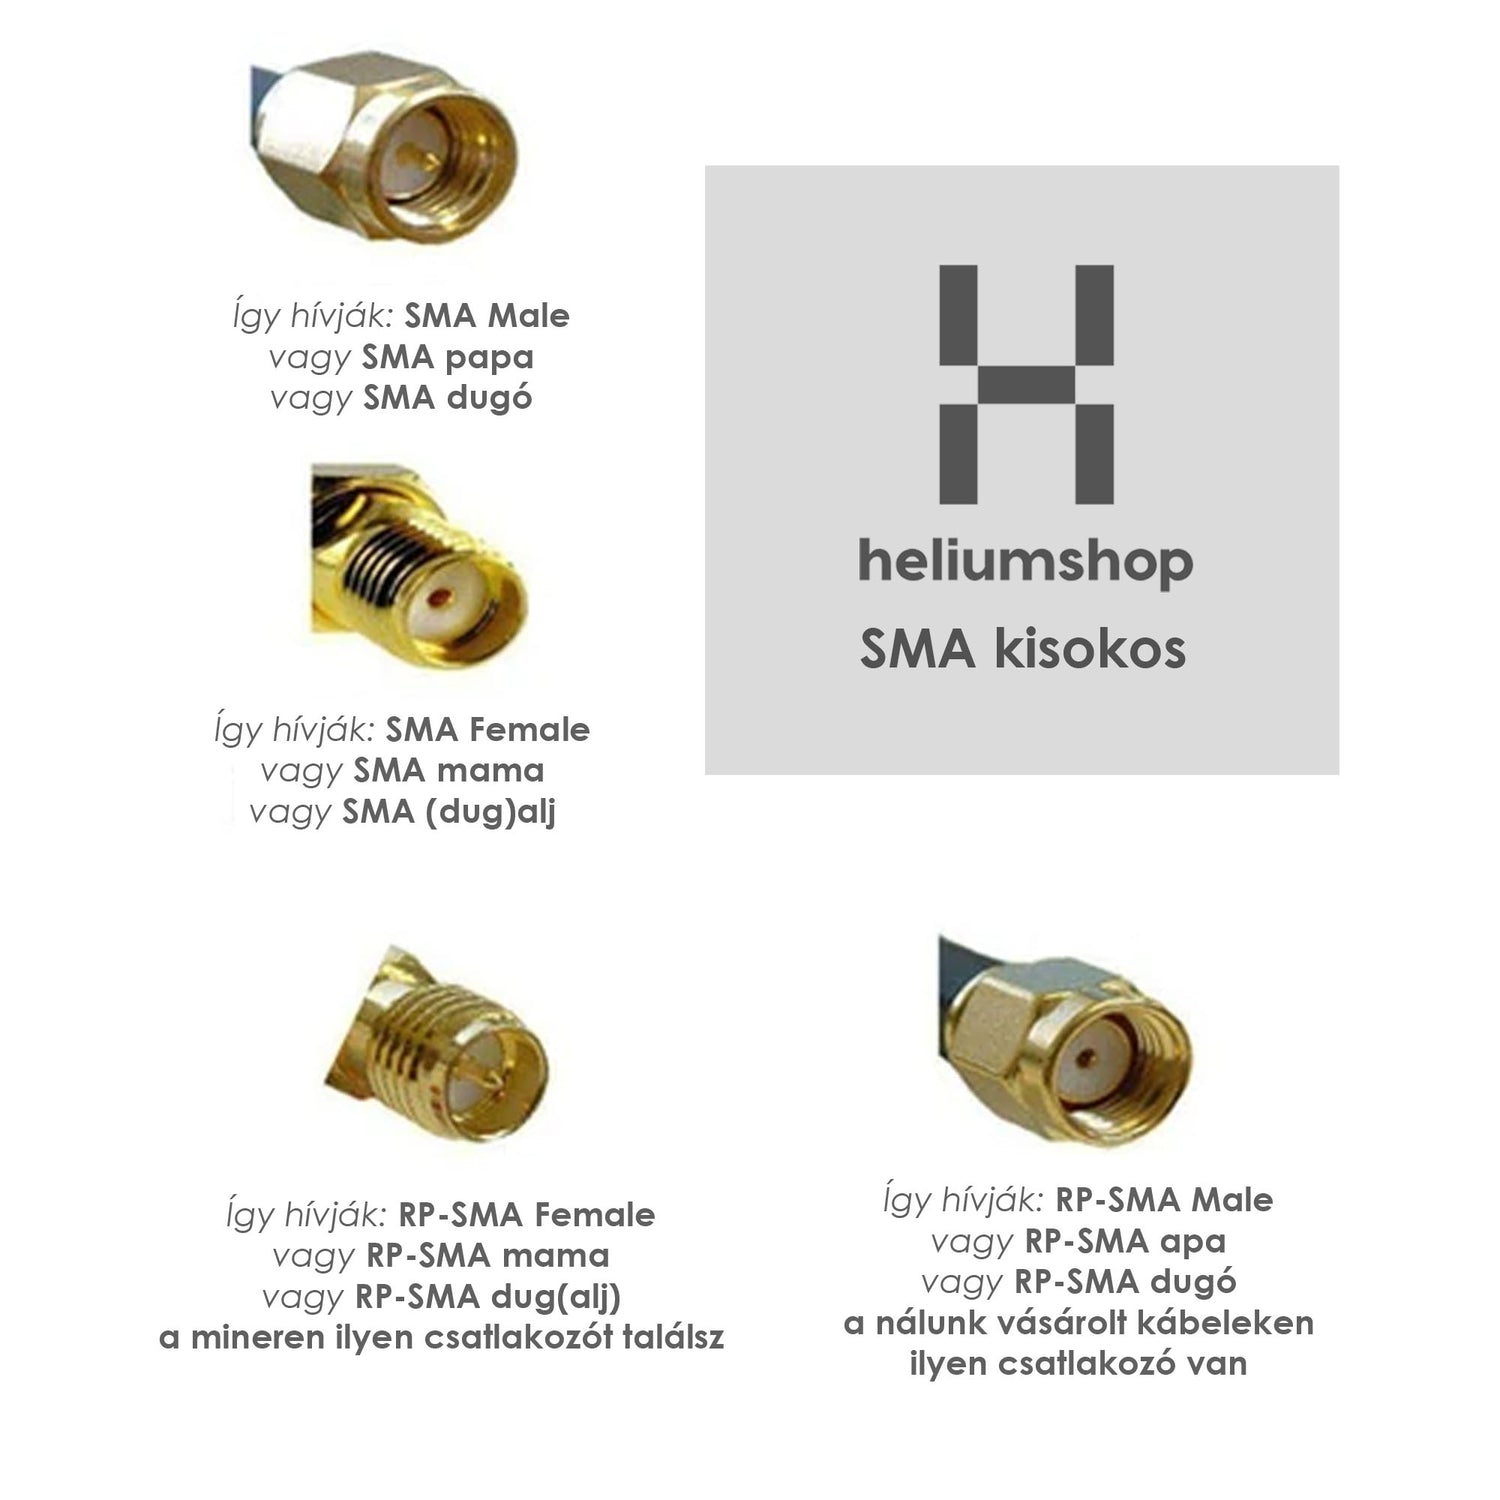 Heliumshop SMA + RPSMA kisokos almanach